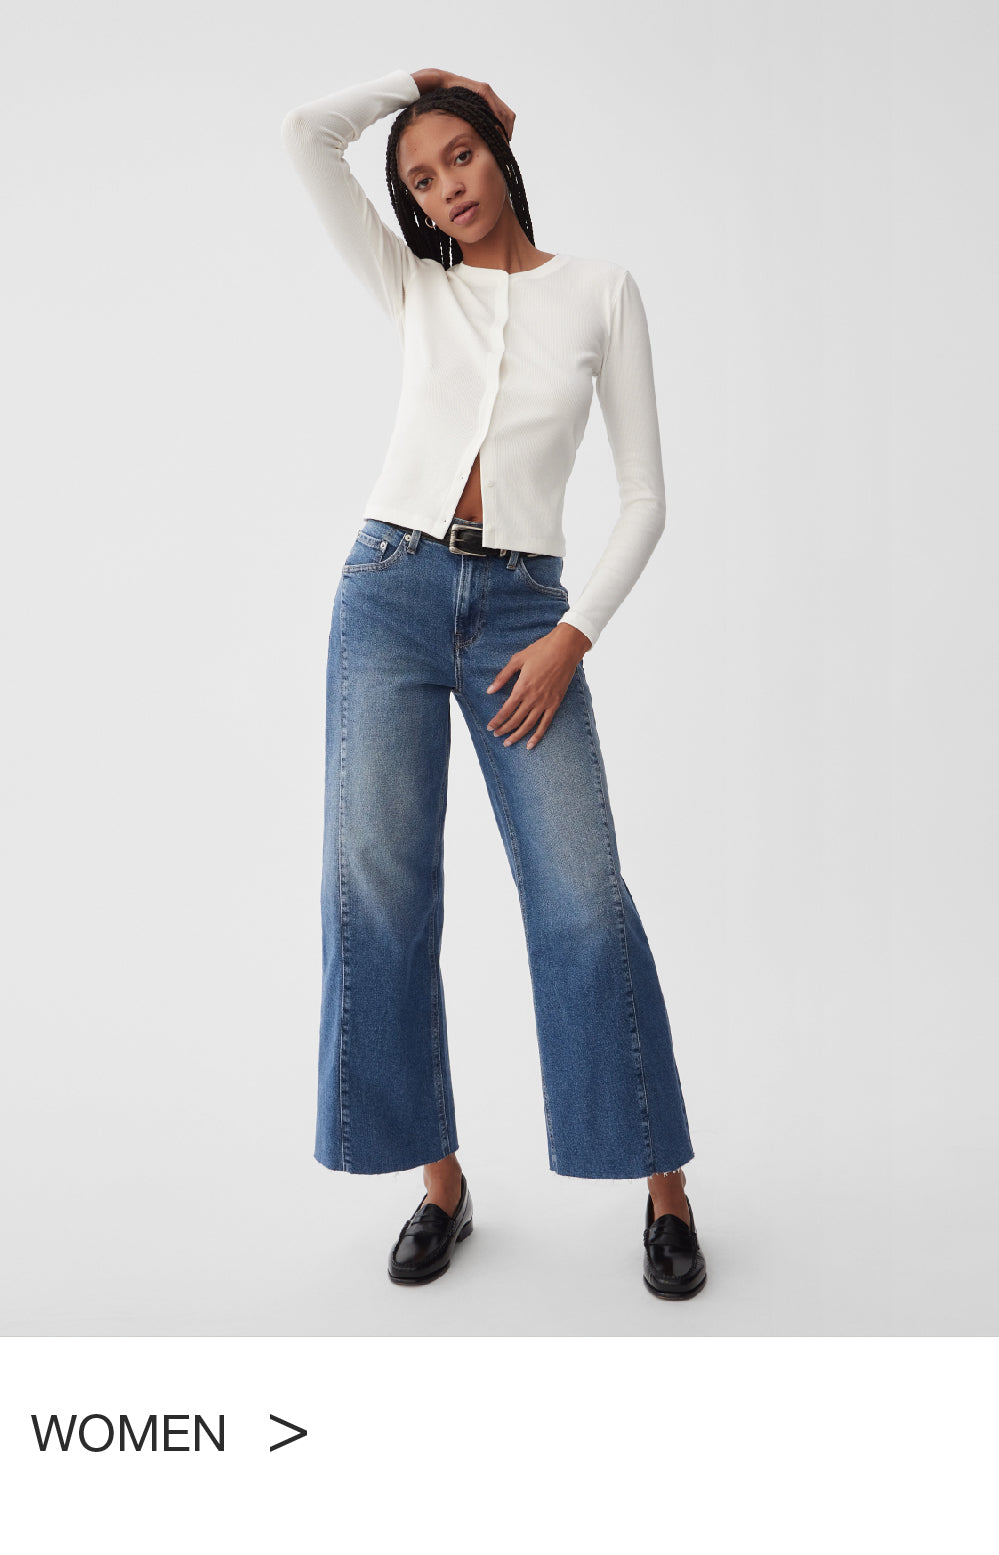 elara Black Short Kurti for Women for Jeans 3/4 Sleeveless Cotton Printed  Tops Under 500 (Small) : Amazon.in: Fashion